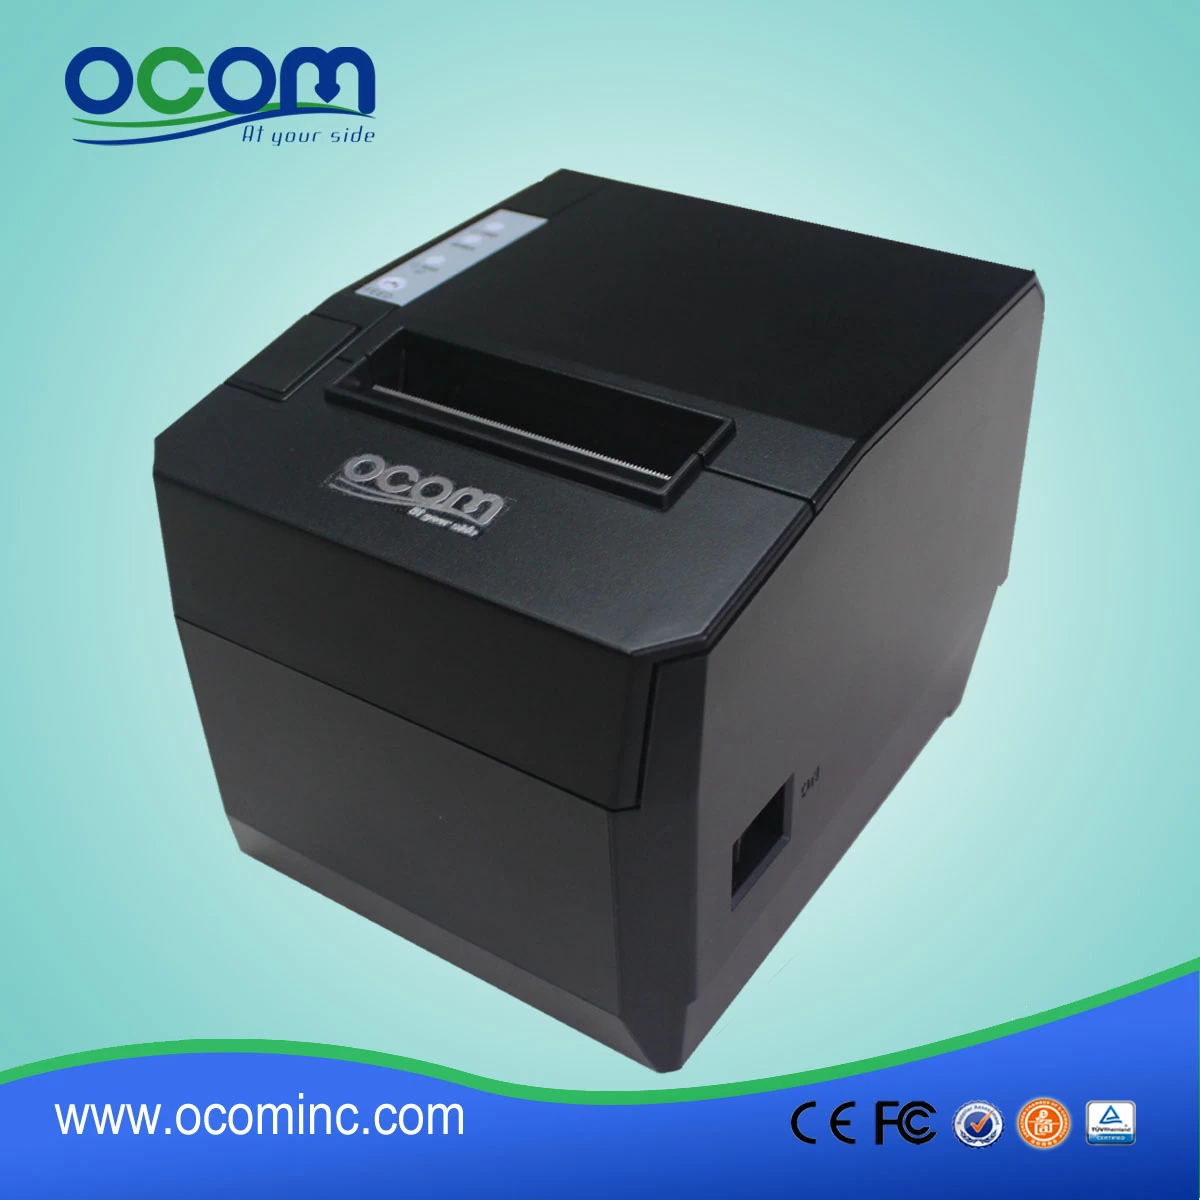 Re: 80mm desktop WIFI thermal receipt printer-OCPP-88A-W